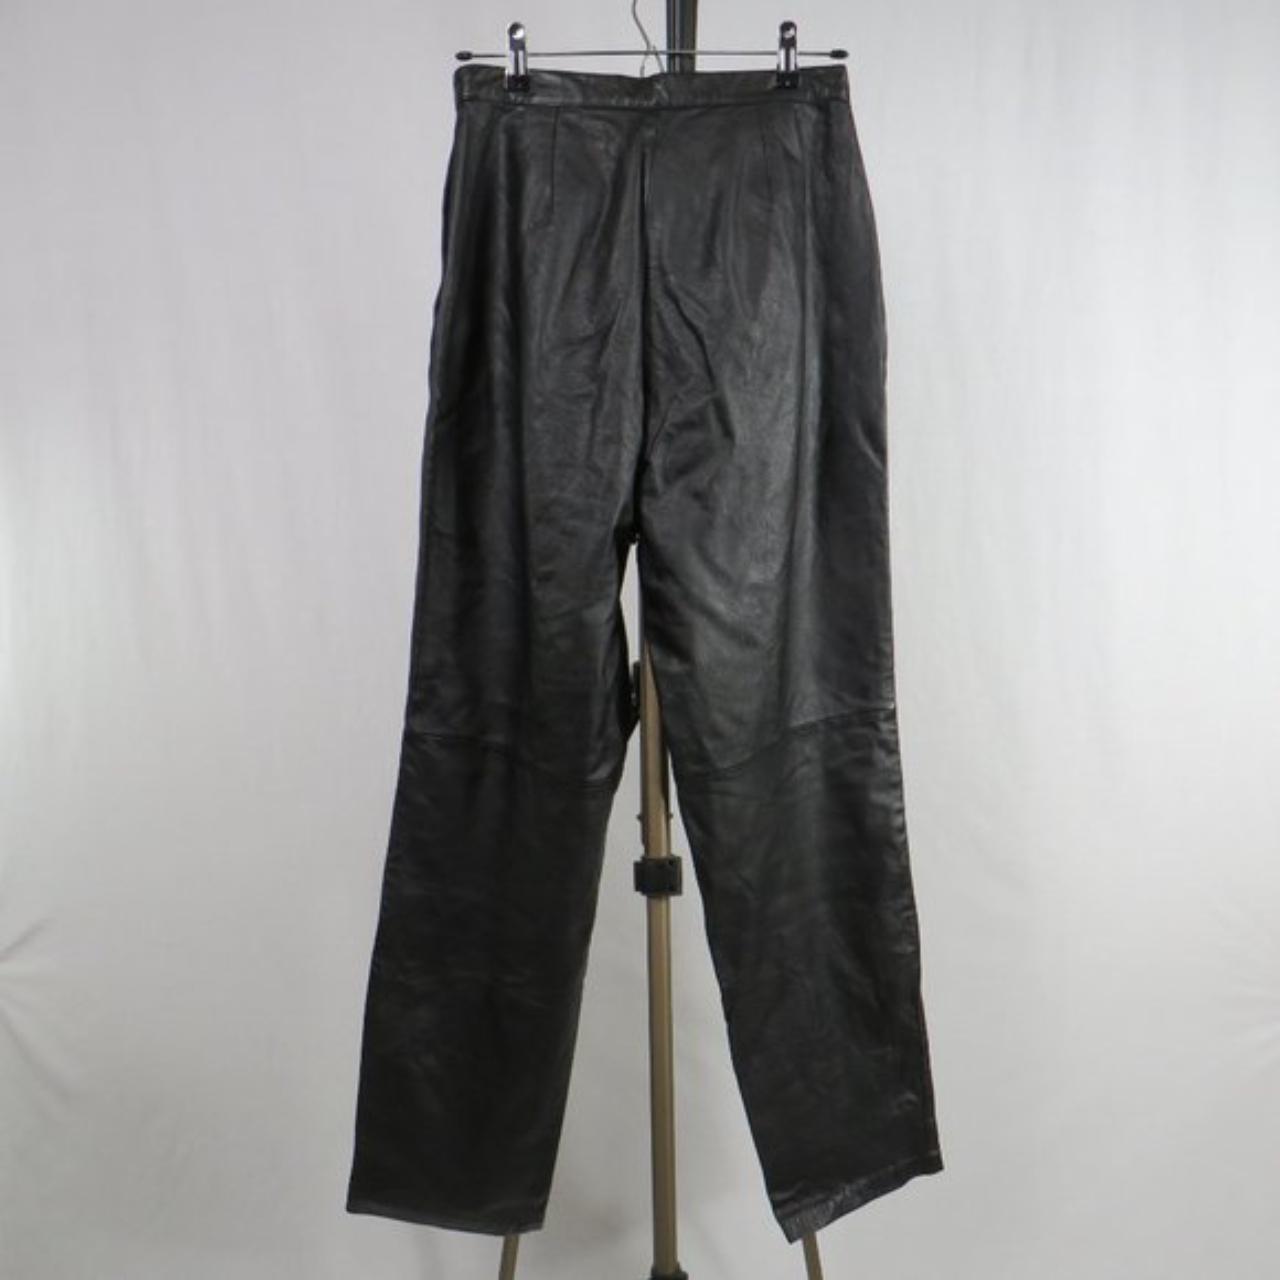 Evan Davies black high-rise leather pants. Waist... - Depop